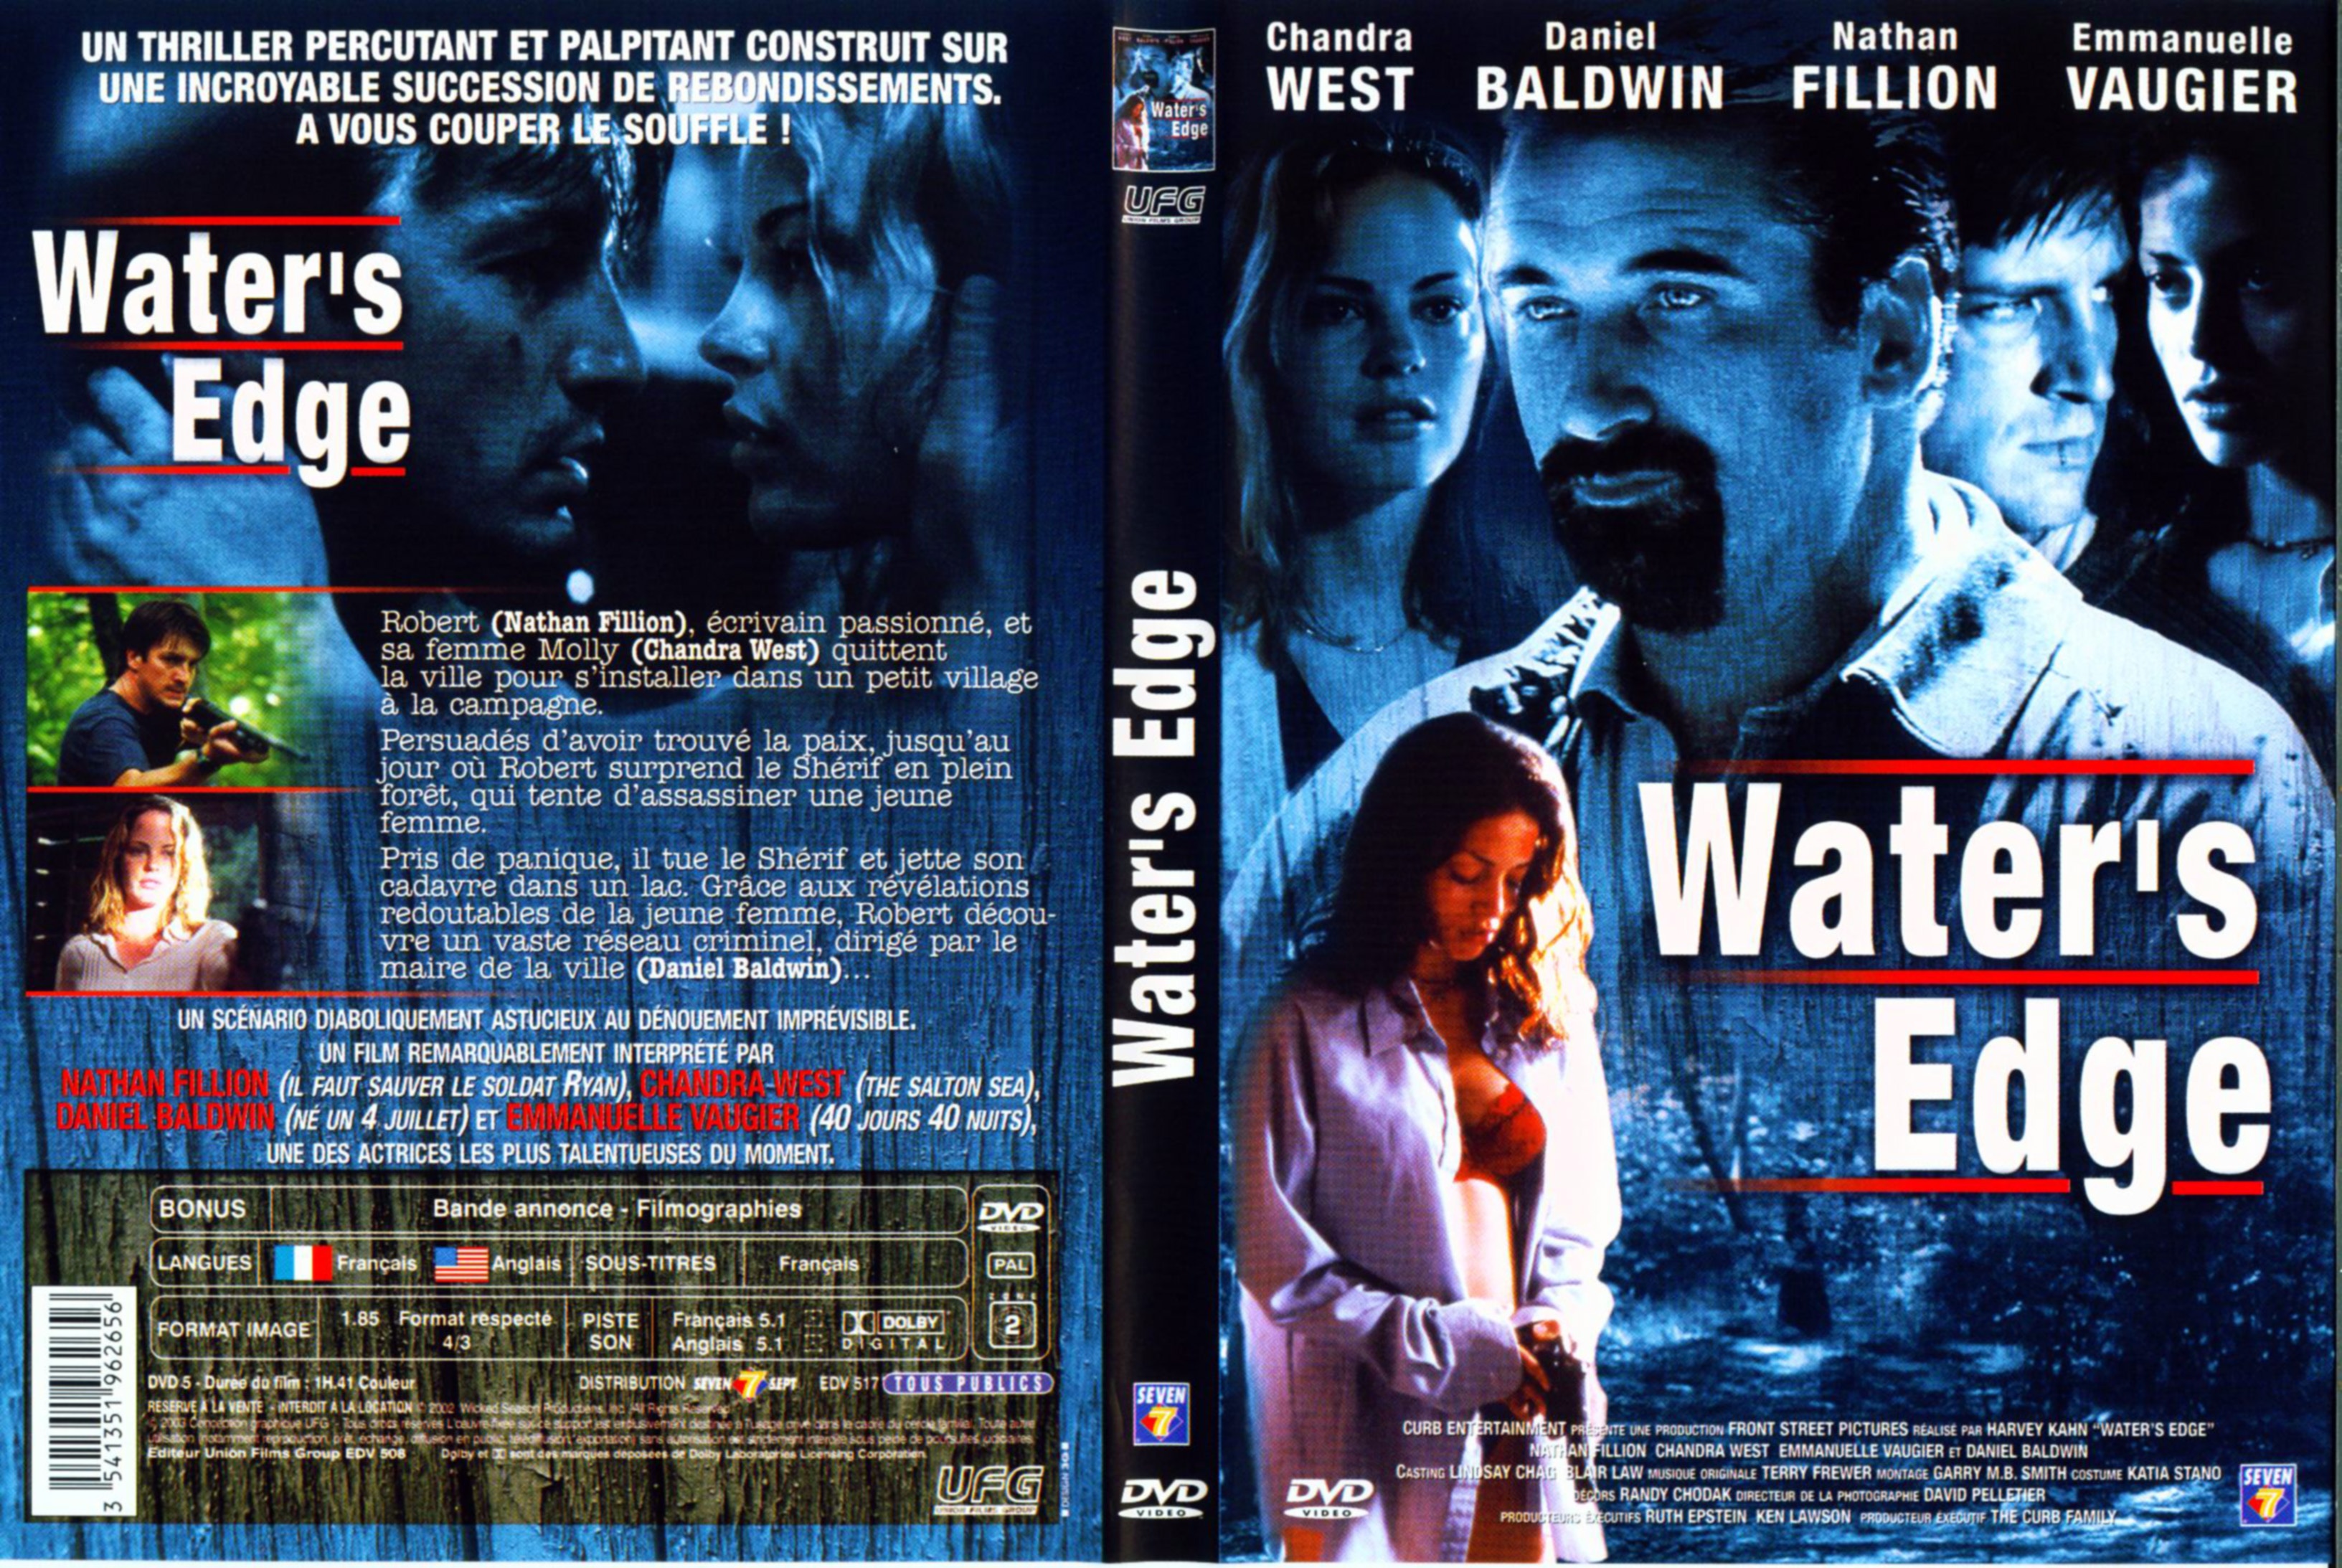 Jaquette DVD Water